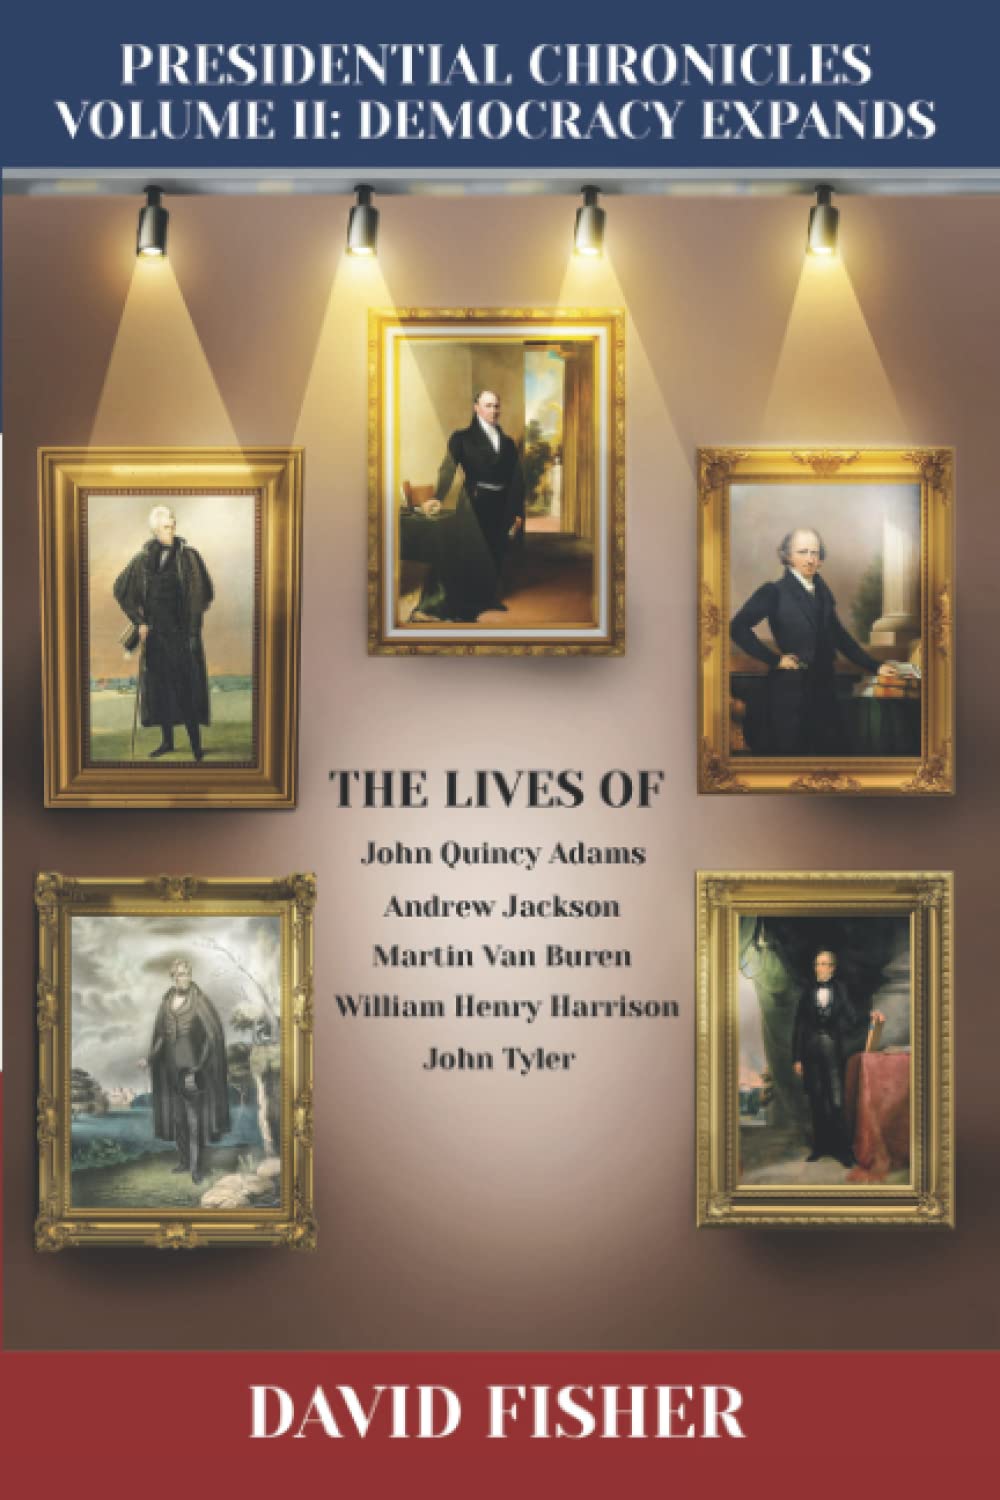 Presidential Chronicles Volume II: Democracy Expands: The Lives of John Quincy Adams, Andrew Jackson, Martin Van Buren, William Henry Harrison, and John Tyler (Presidential Chronicles - Volumes)